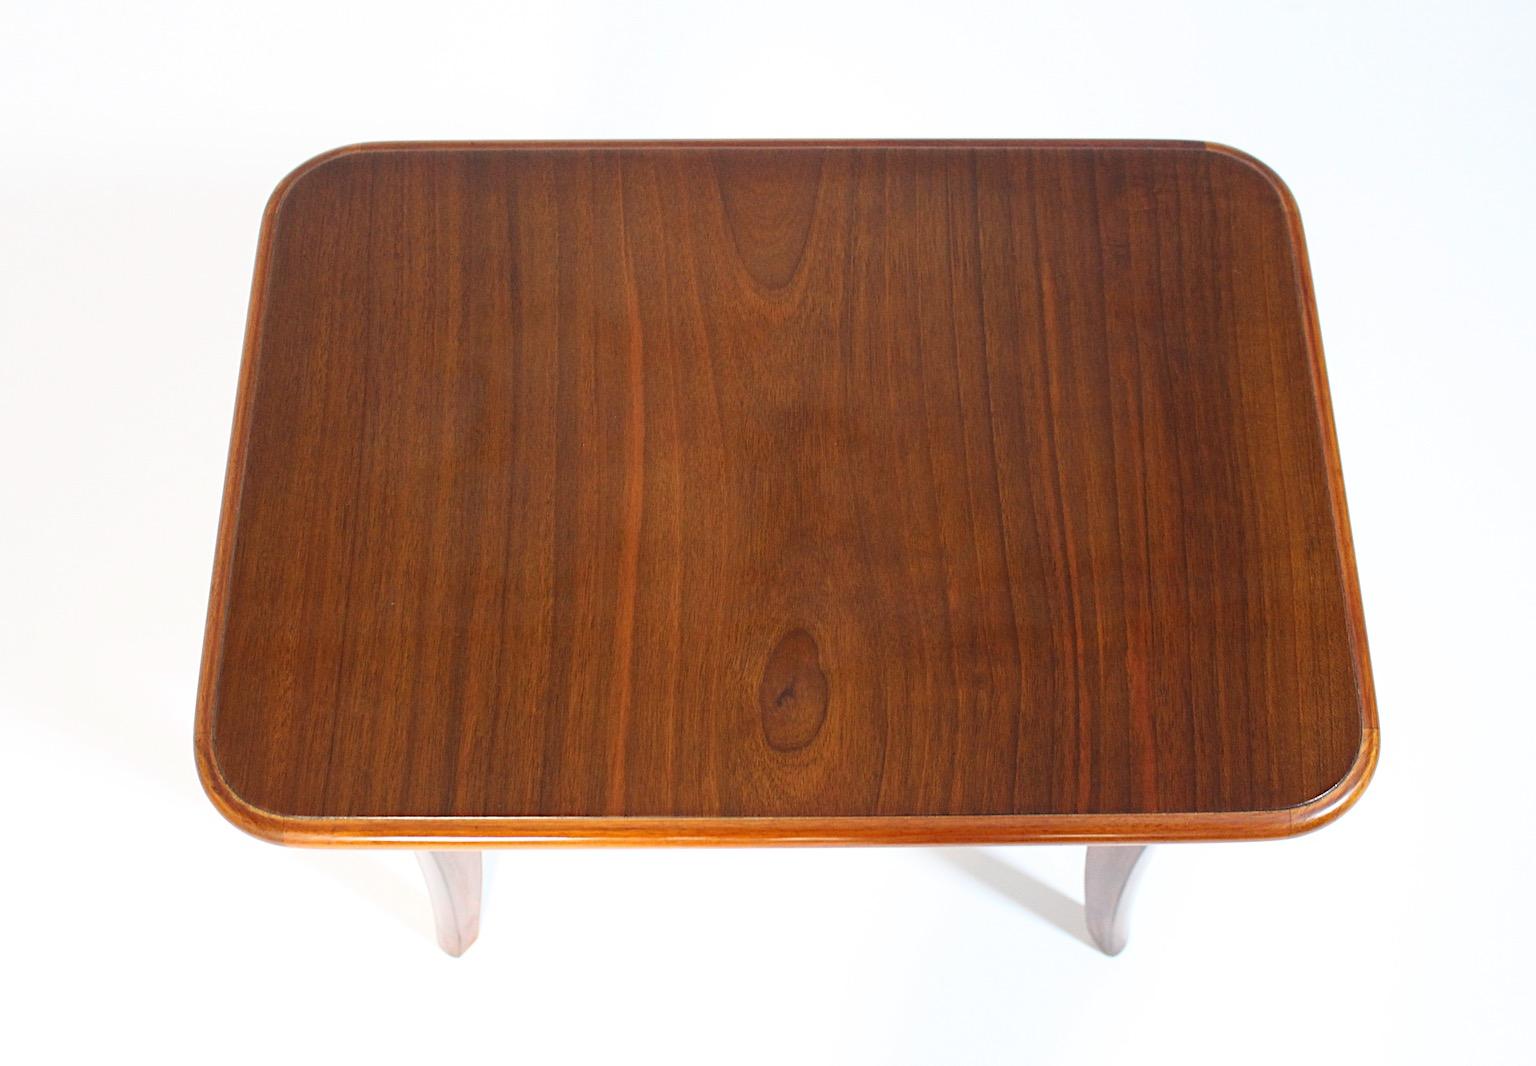 Walnut Art Deco Vintage Rectangular Side Table Coffee Table Circle Josef Frank 1930s